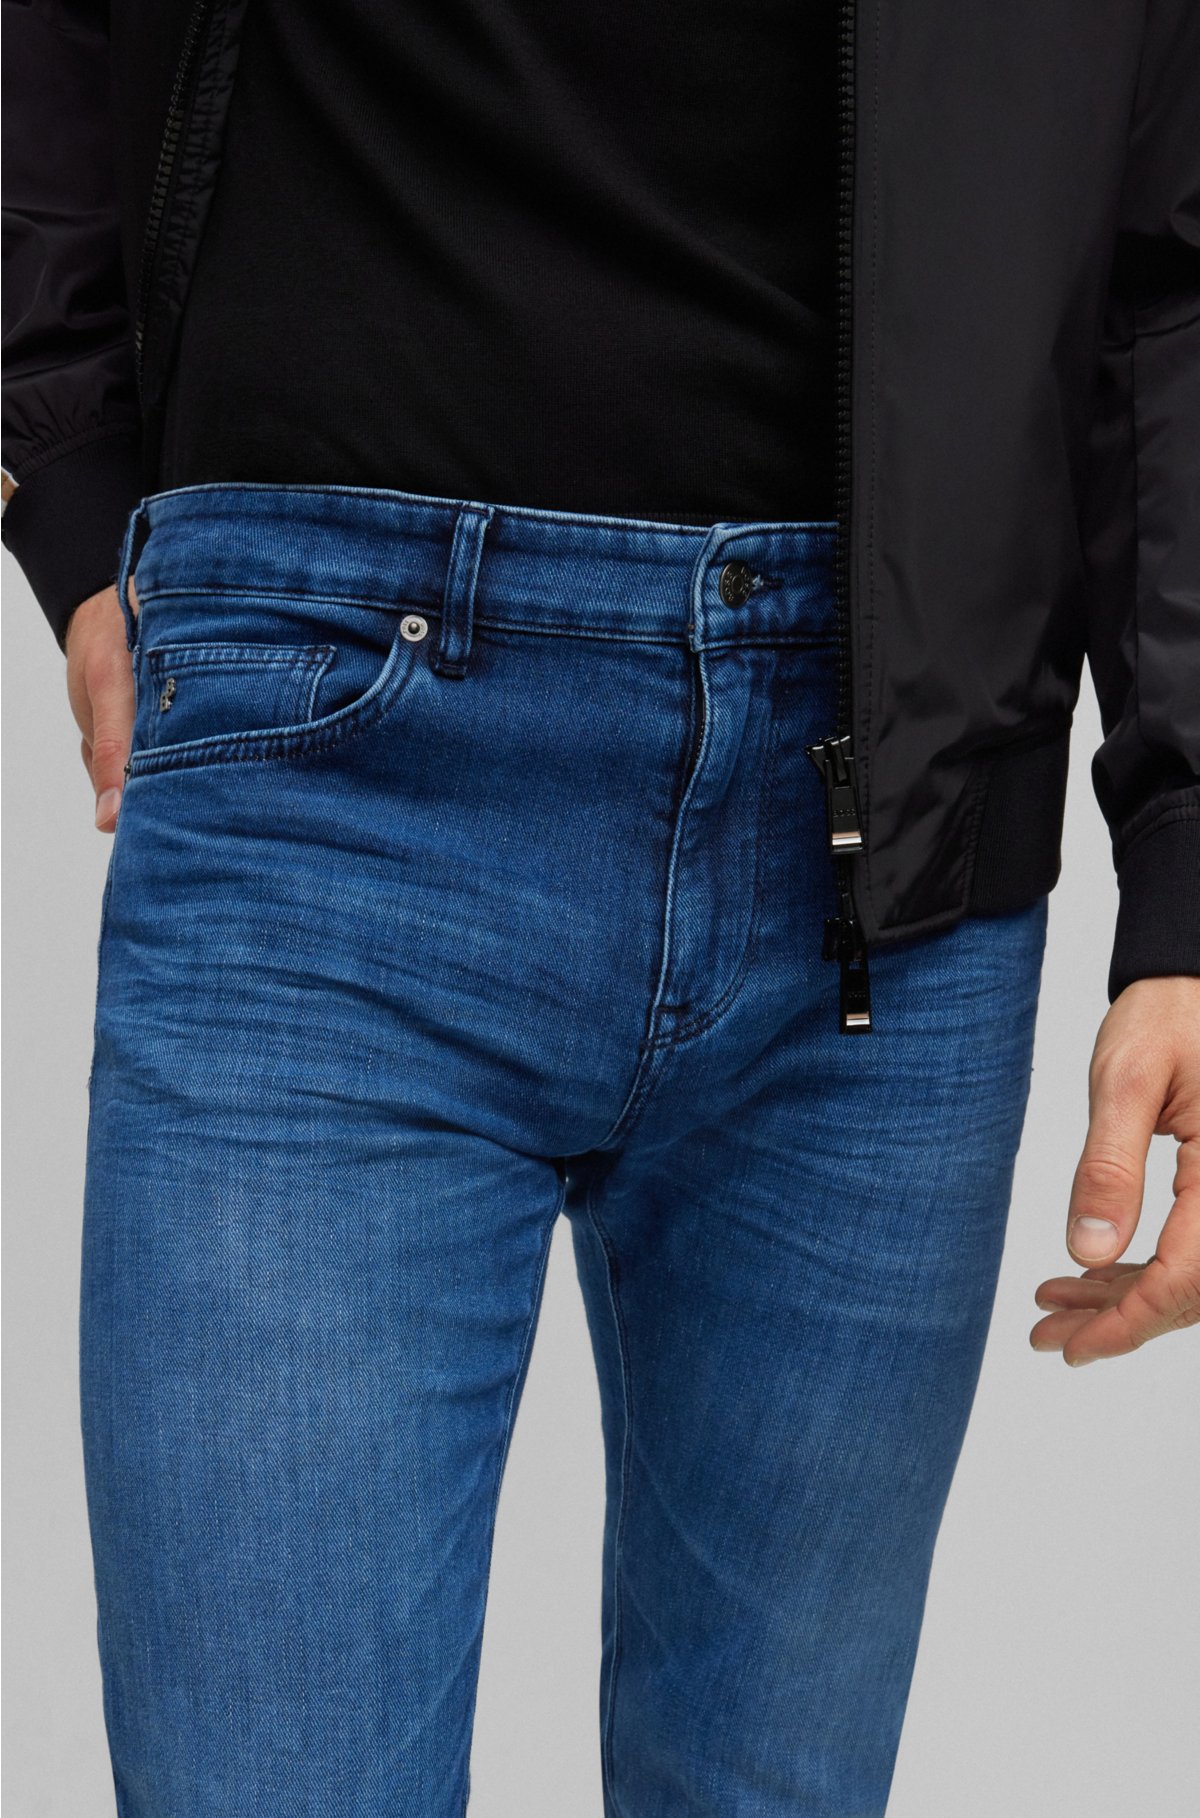 G-STAR RAW Denim Jeans Pants Straight Leg Button Down Closure Blue For Men  Size